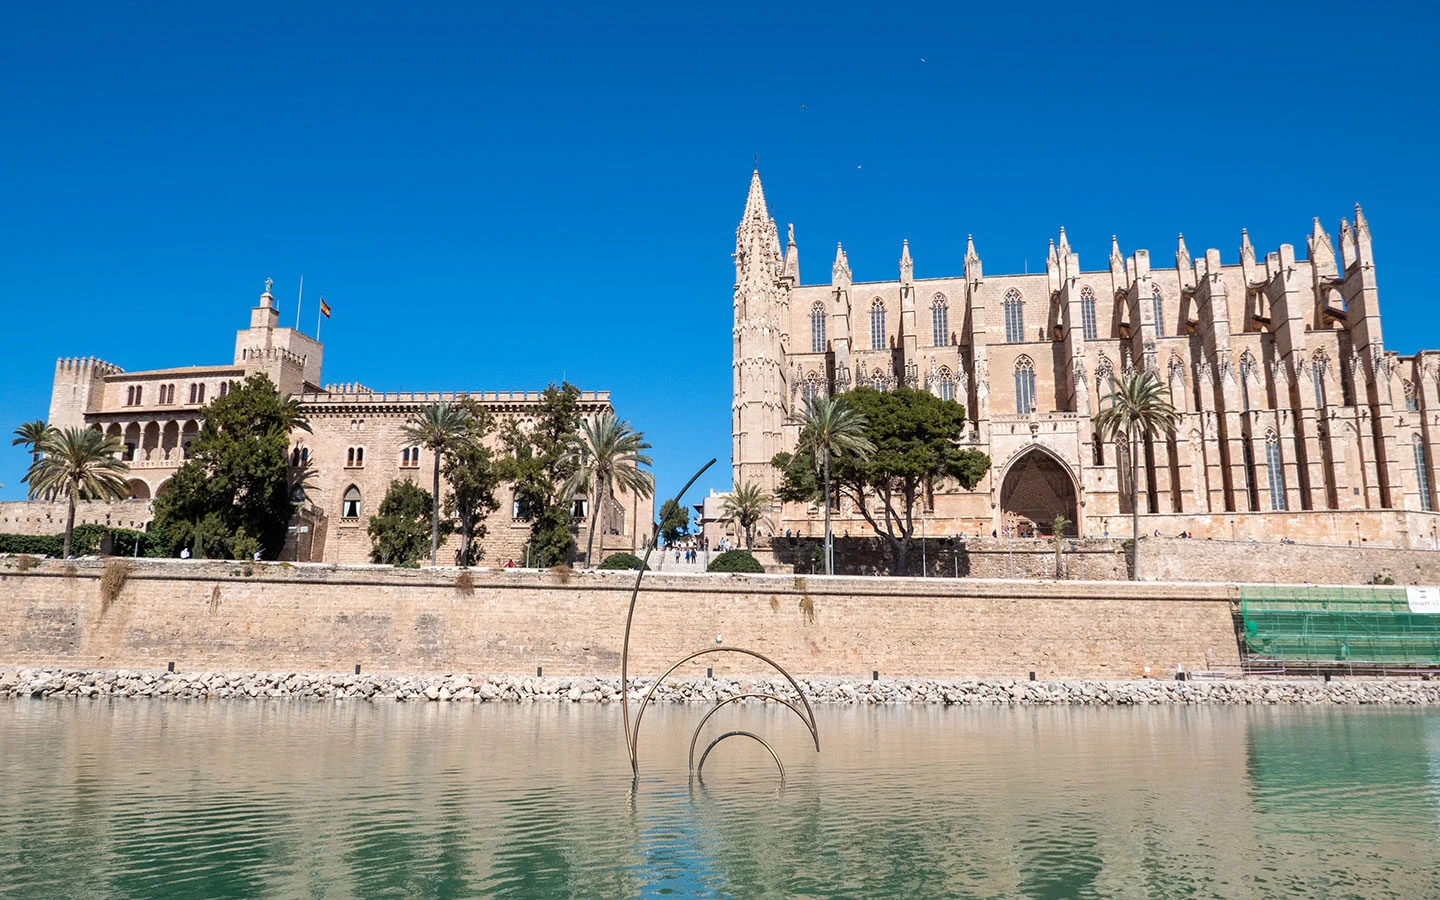 Palma's cathedral and palace